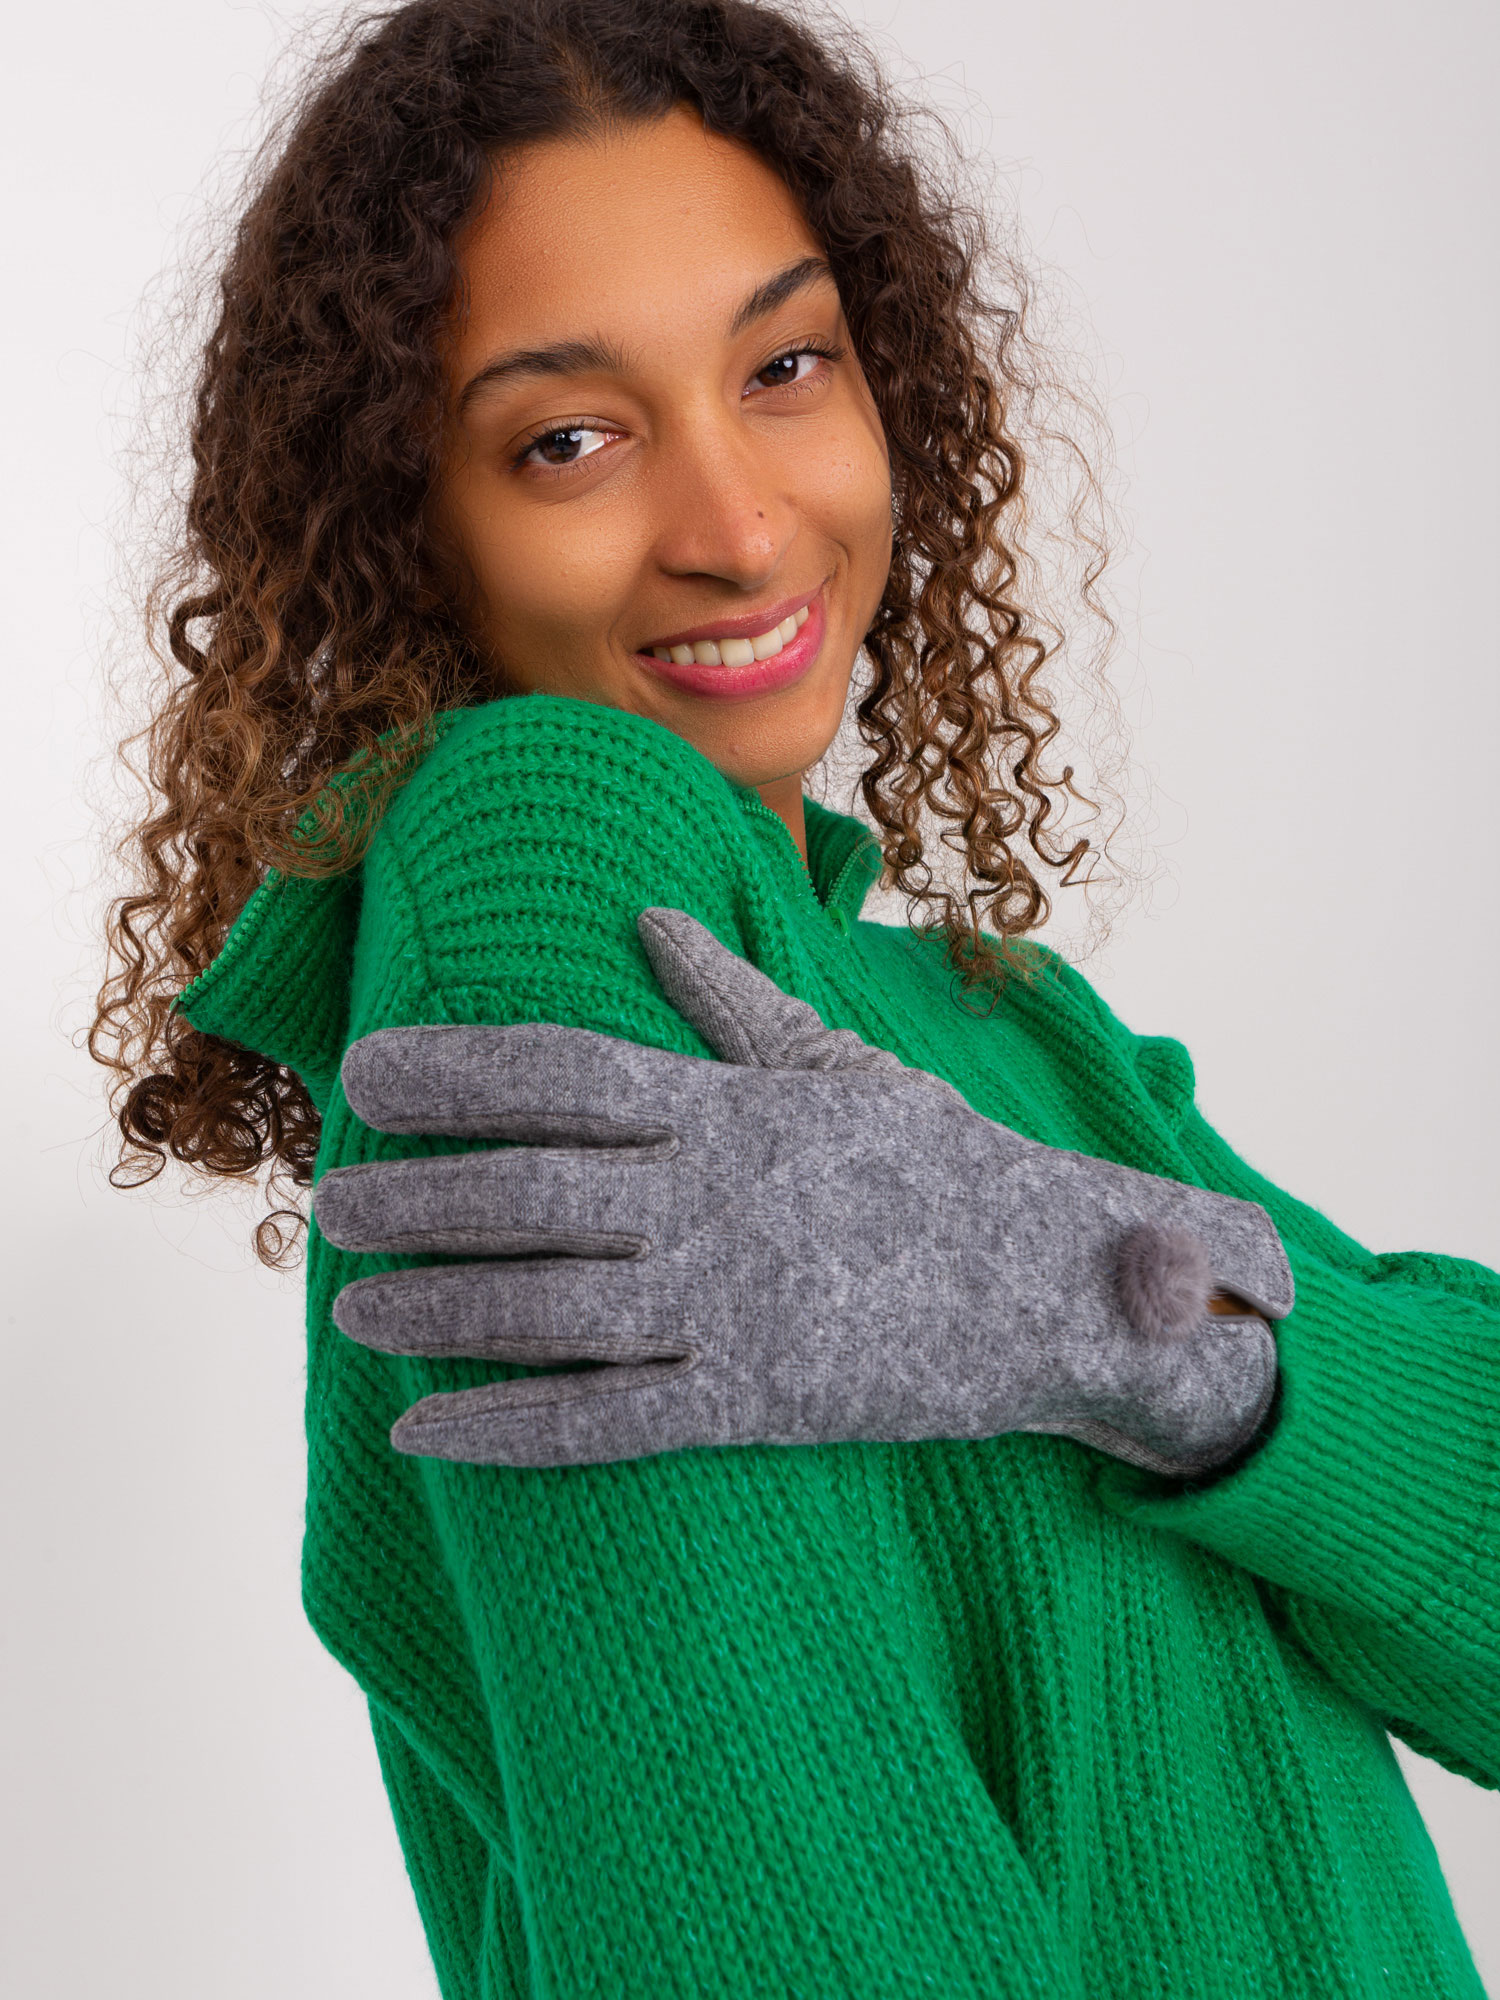 Dark grey tactile gloves with pompom